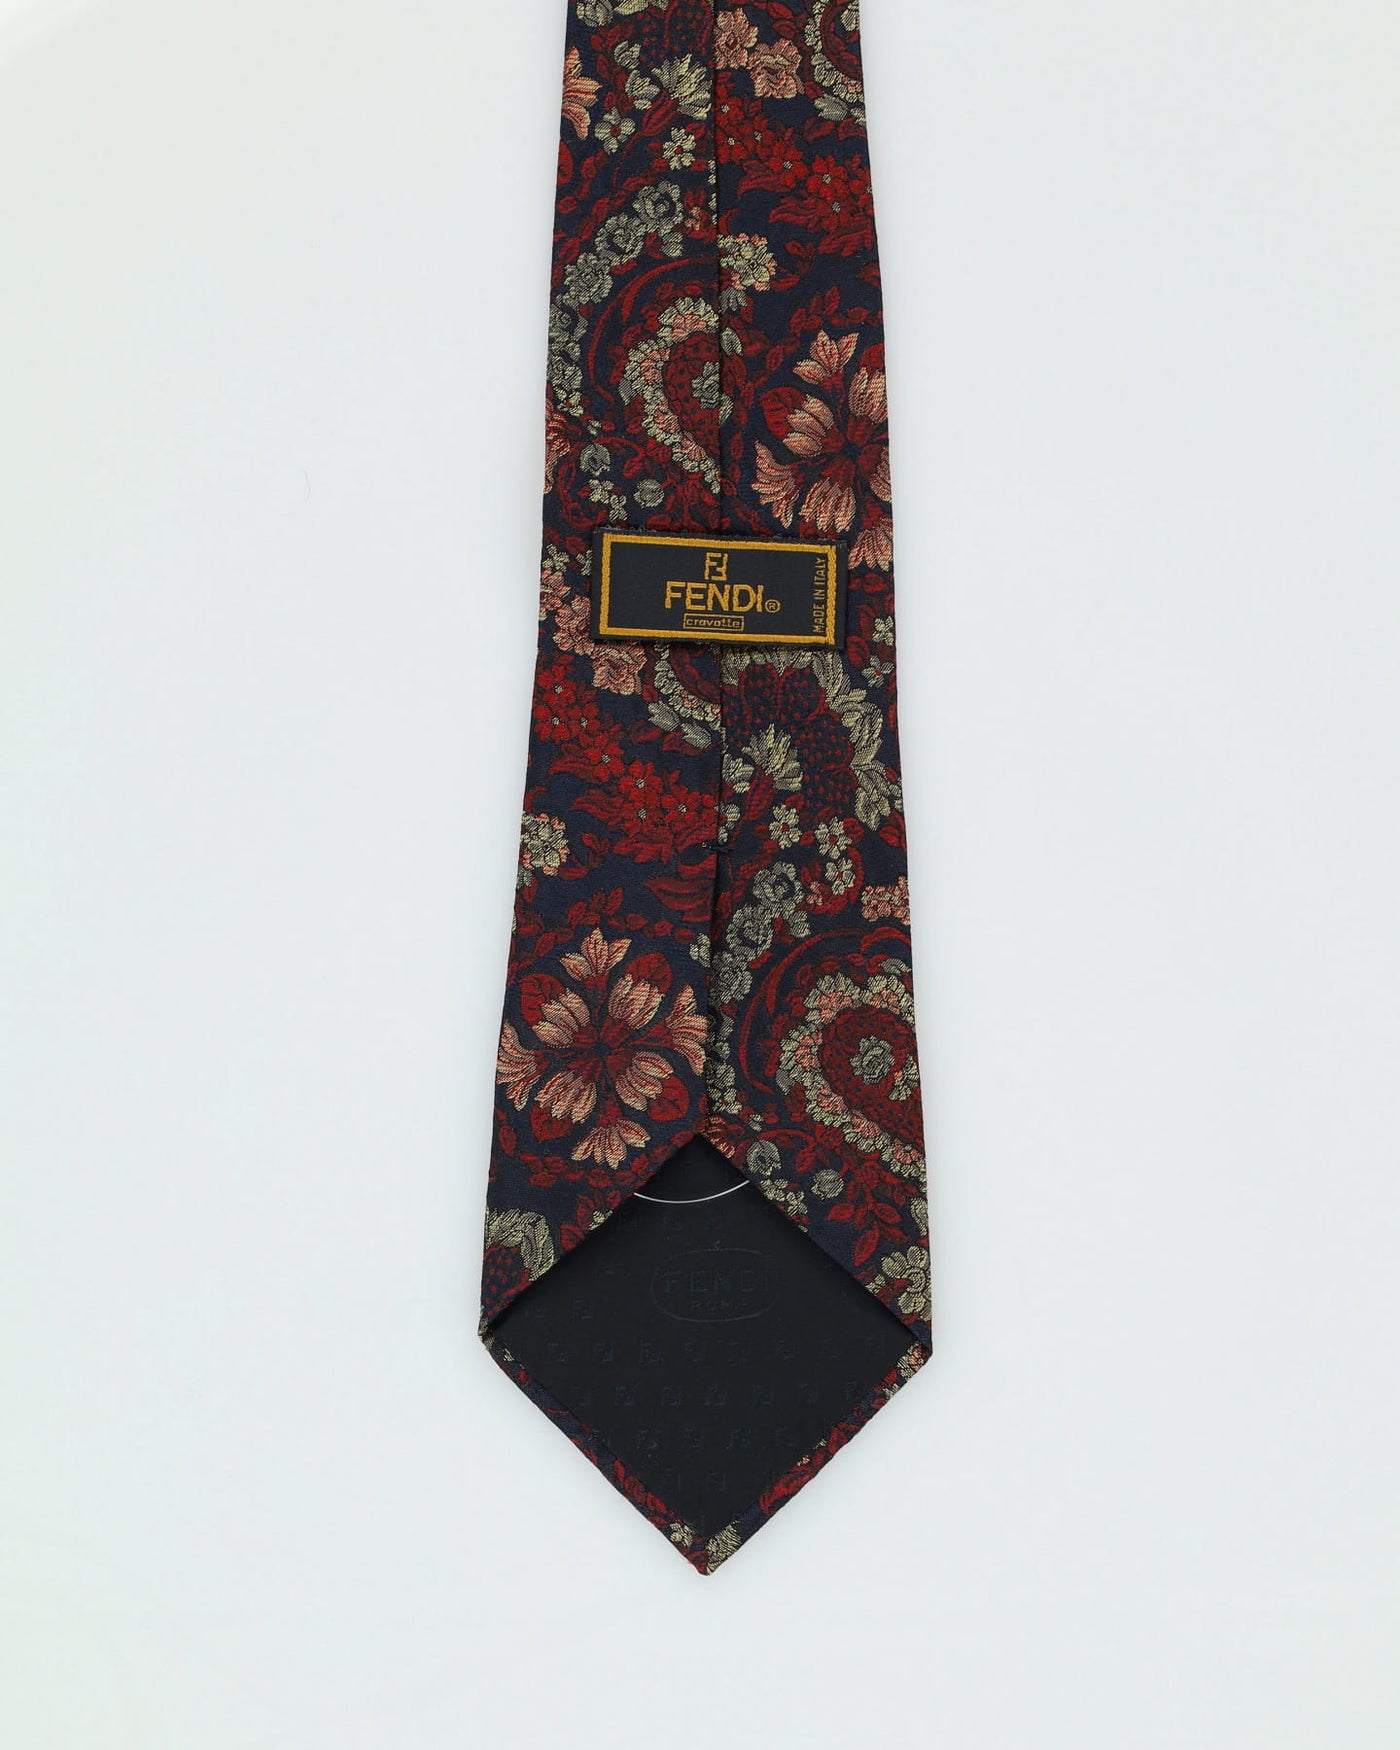 Fendi Black / Red Paisley Patterned Tie